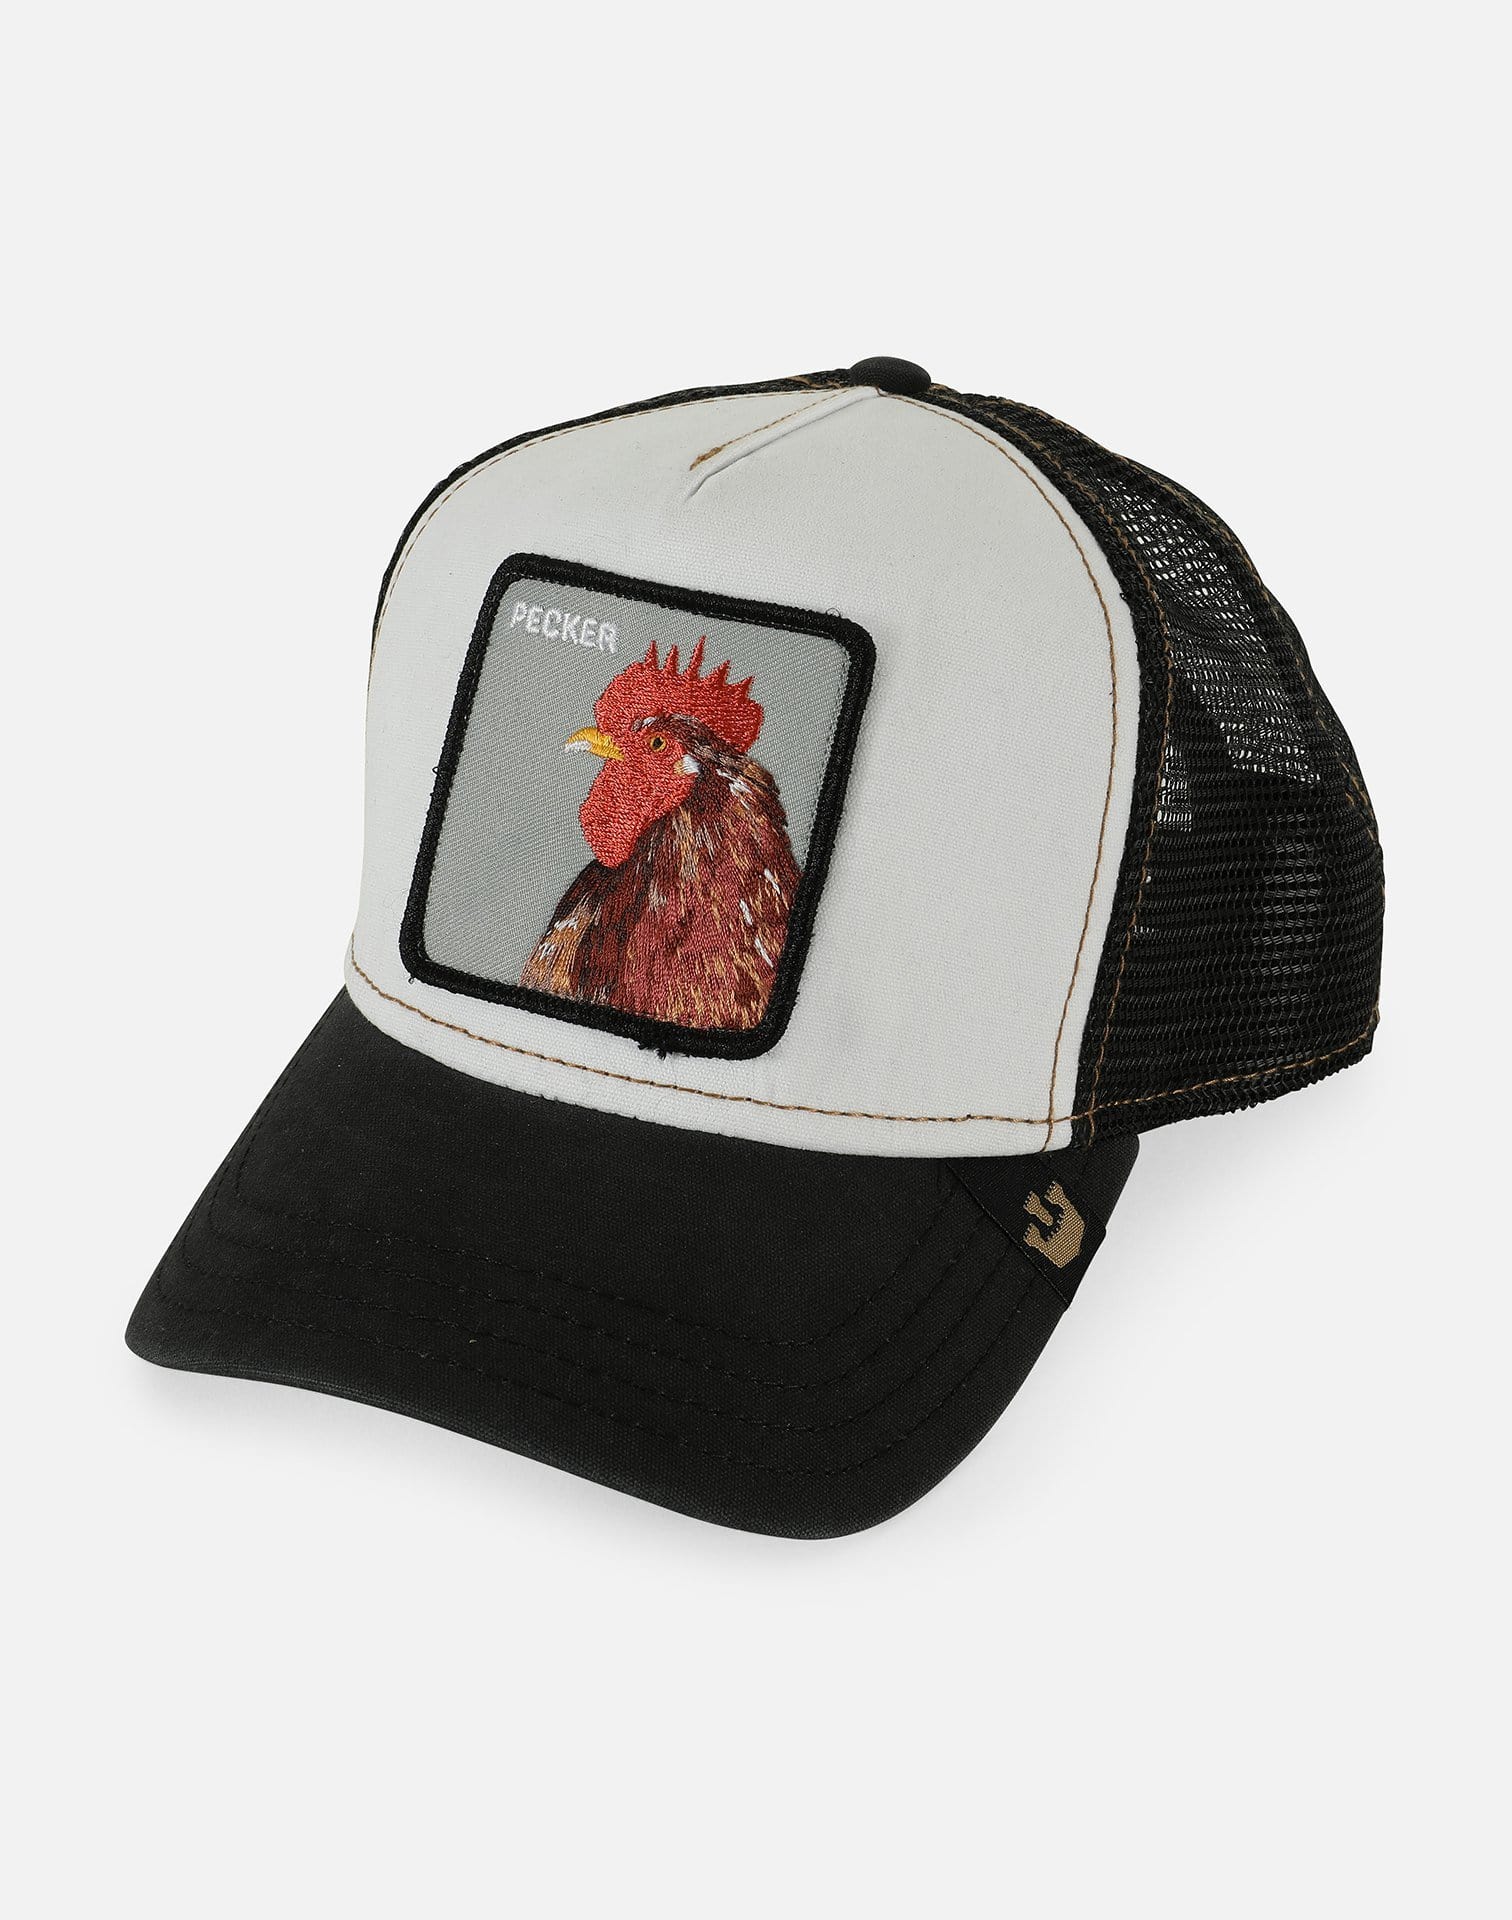 Goorin Bros Inc. Plucker Trucker Hat